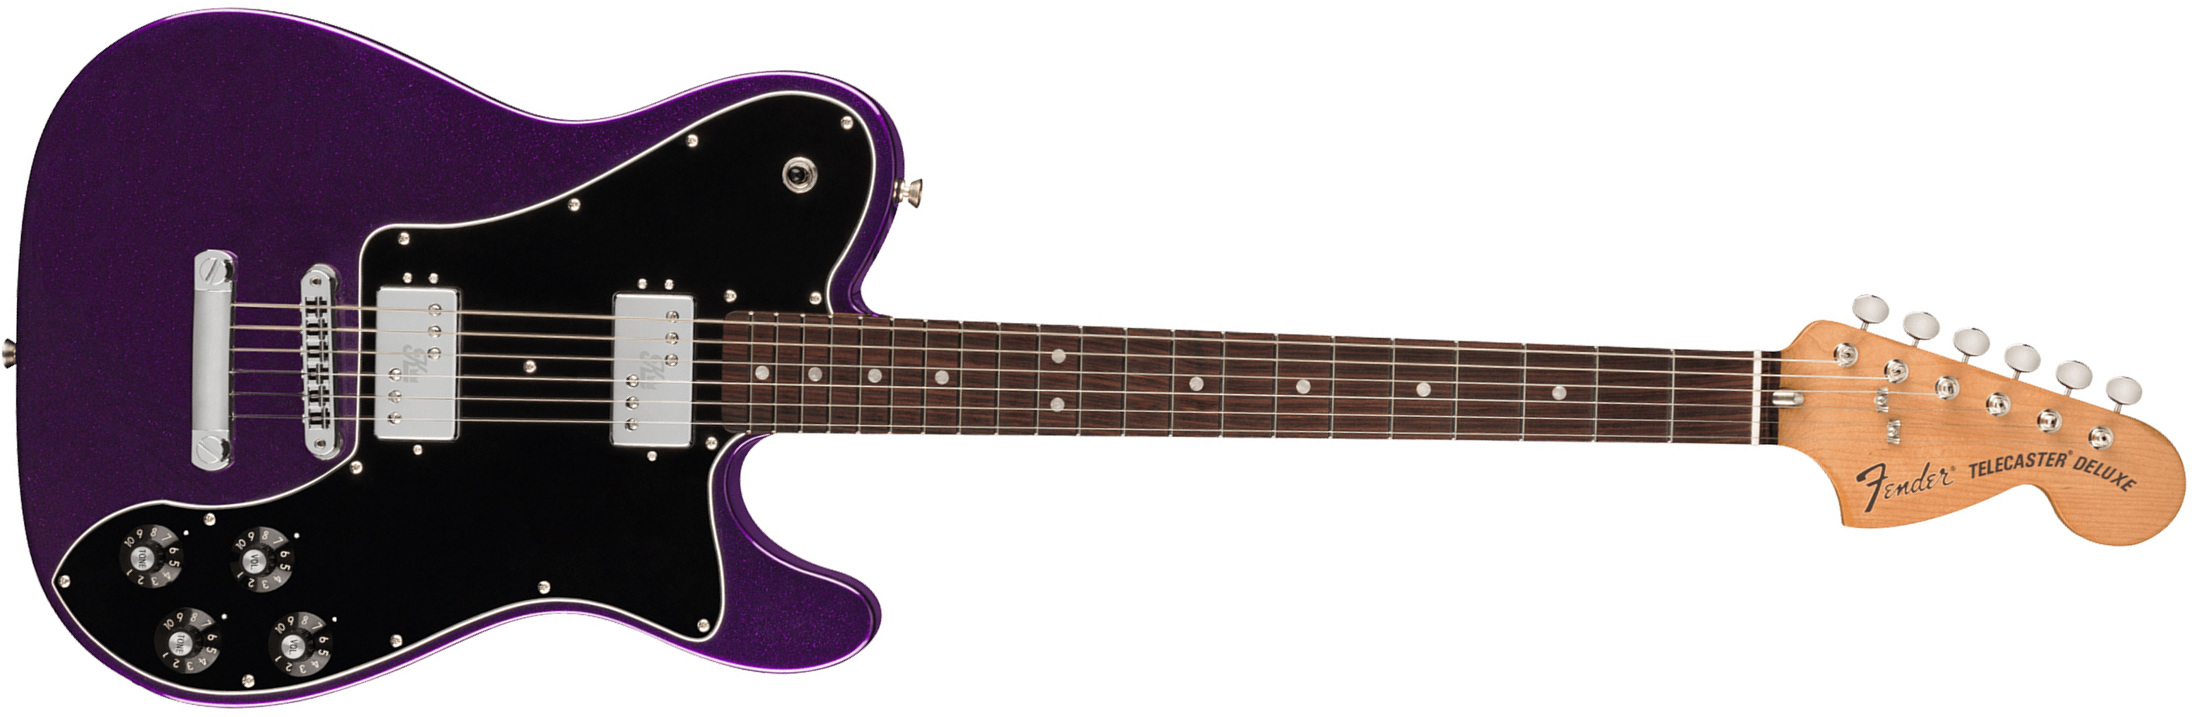 Fender Kingfish Tele Deluxe Usa Signature Hh Ht Rw - Mississippi Night - Guitarra eléctrica con forma de tel - Main picture